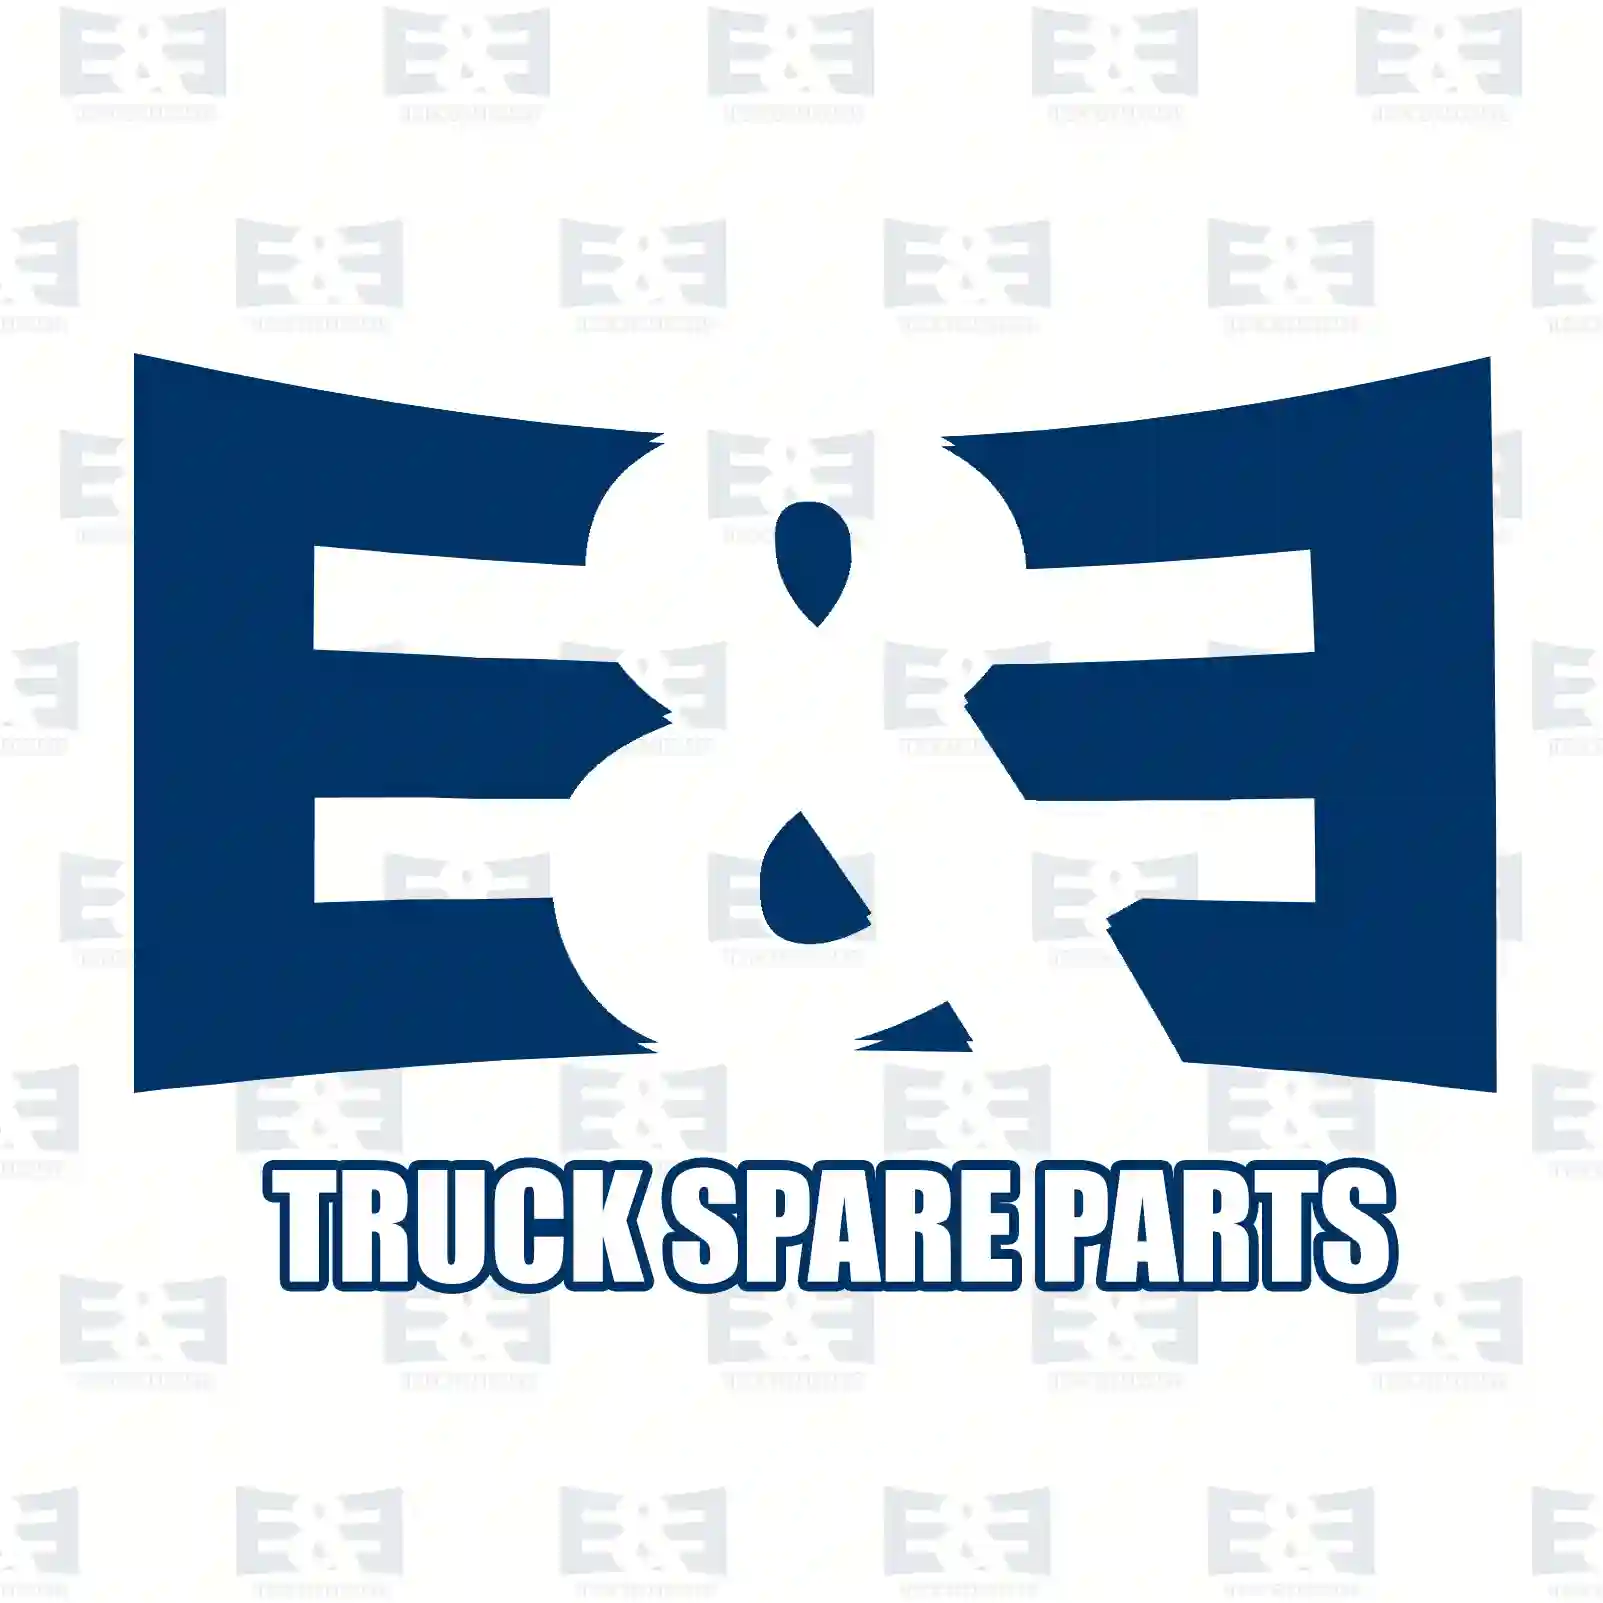 Spring brake cylinder, 2E2296677, 504191316, ZG50788-0008 ||  2E2296677 E&E Truck Spare Parts | Truck Spare Parts, Auotomotive Spare Parts Spring brake cylinder, 2E2296677, 504191316, ZG50788-0008 ||  2E2296677 E&E Truck Spare Parts | Truck Spare Parts, Auotomotive Spare Parts